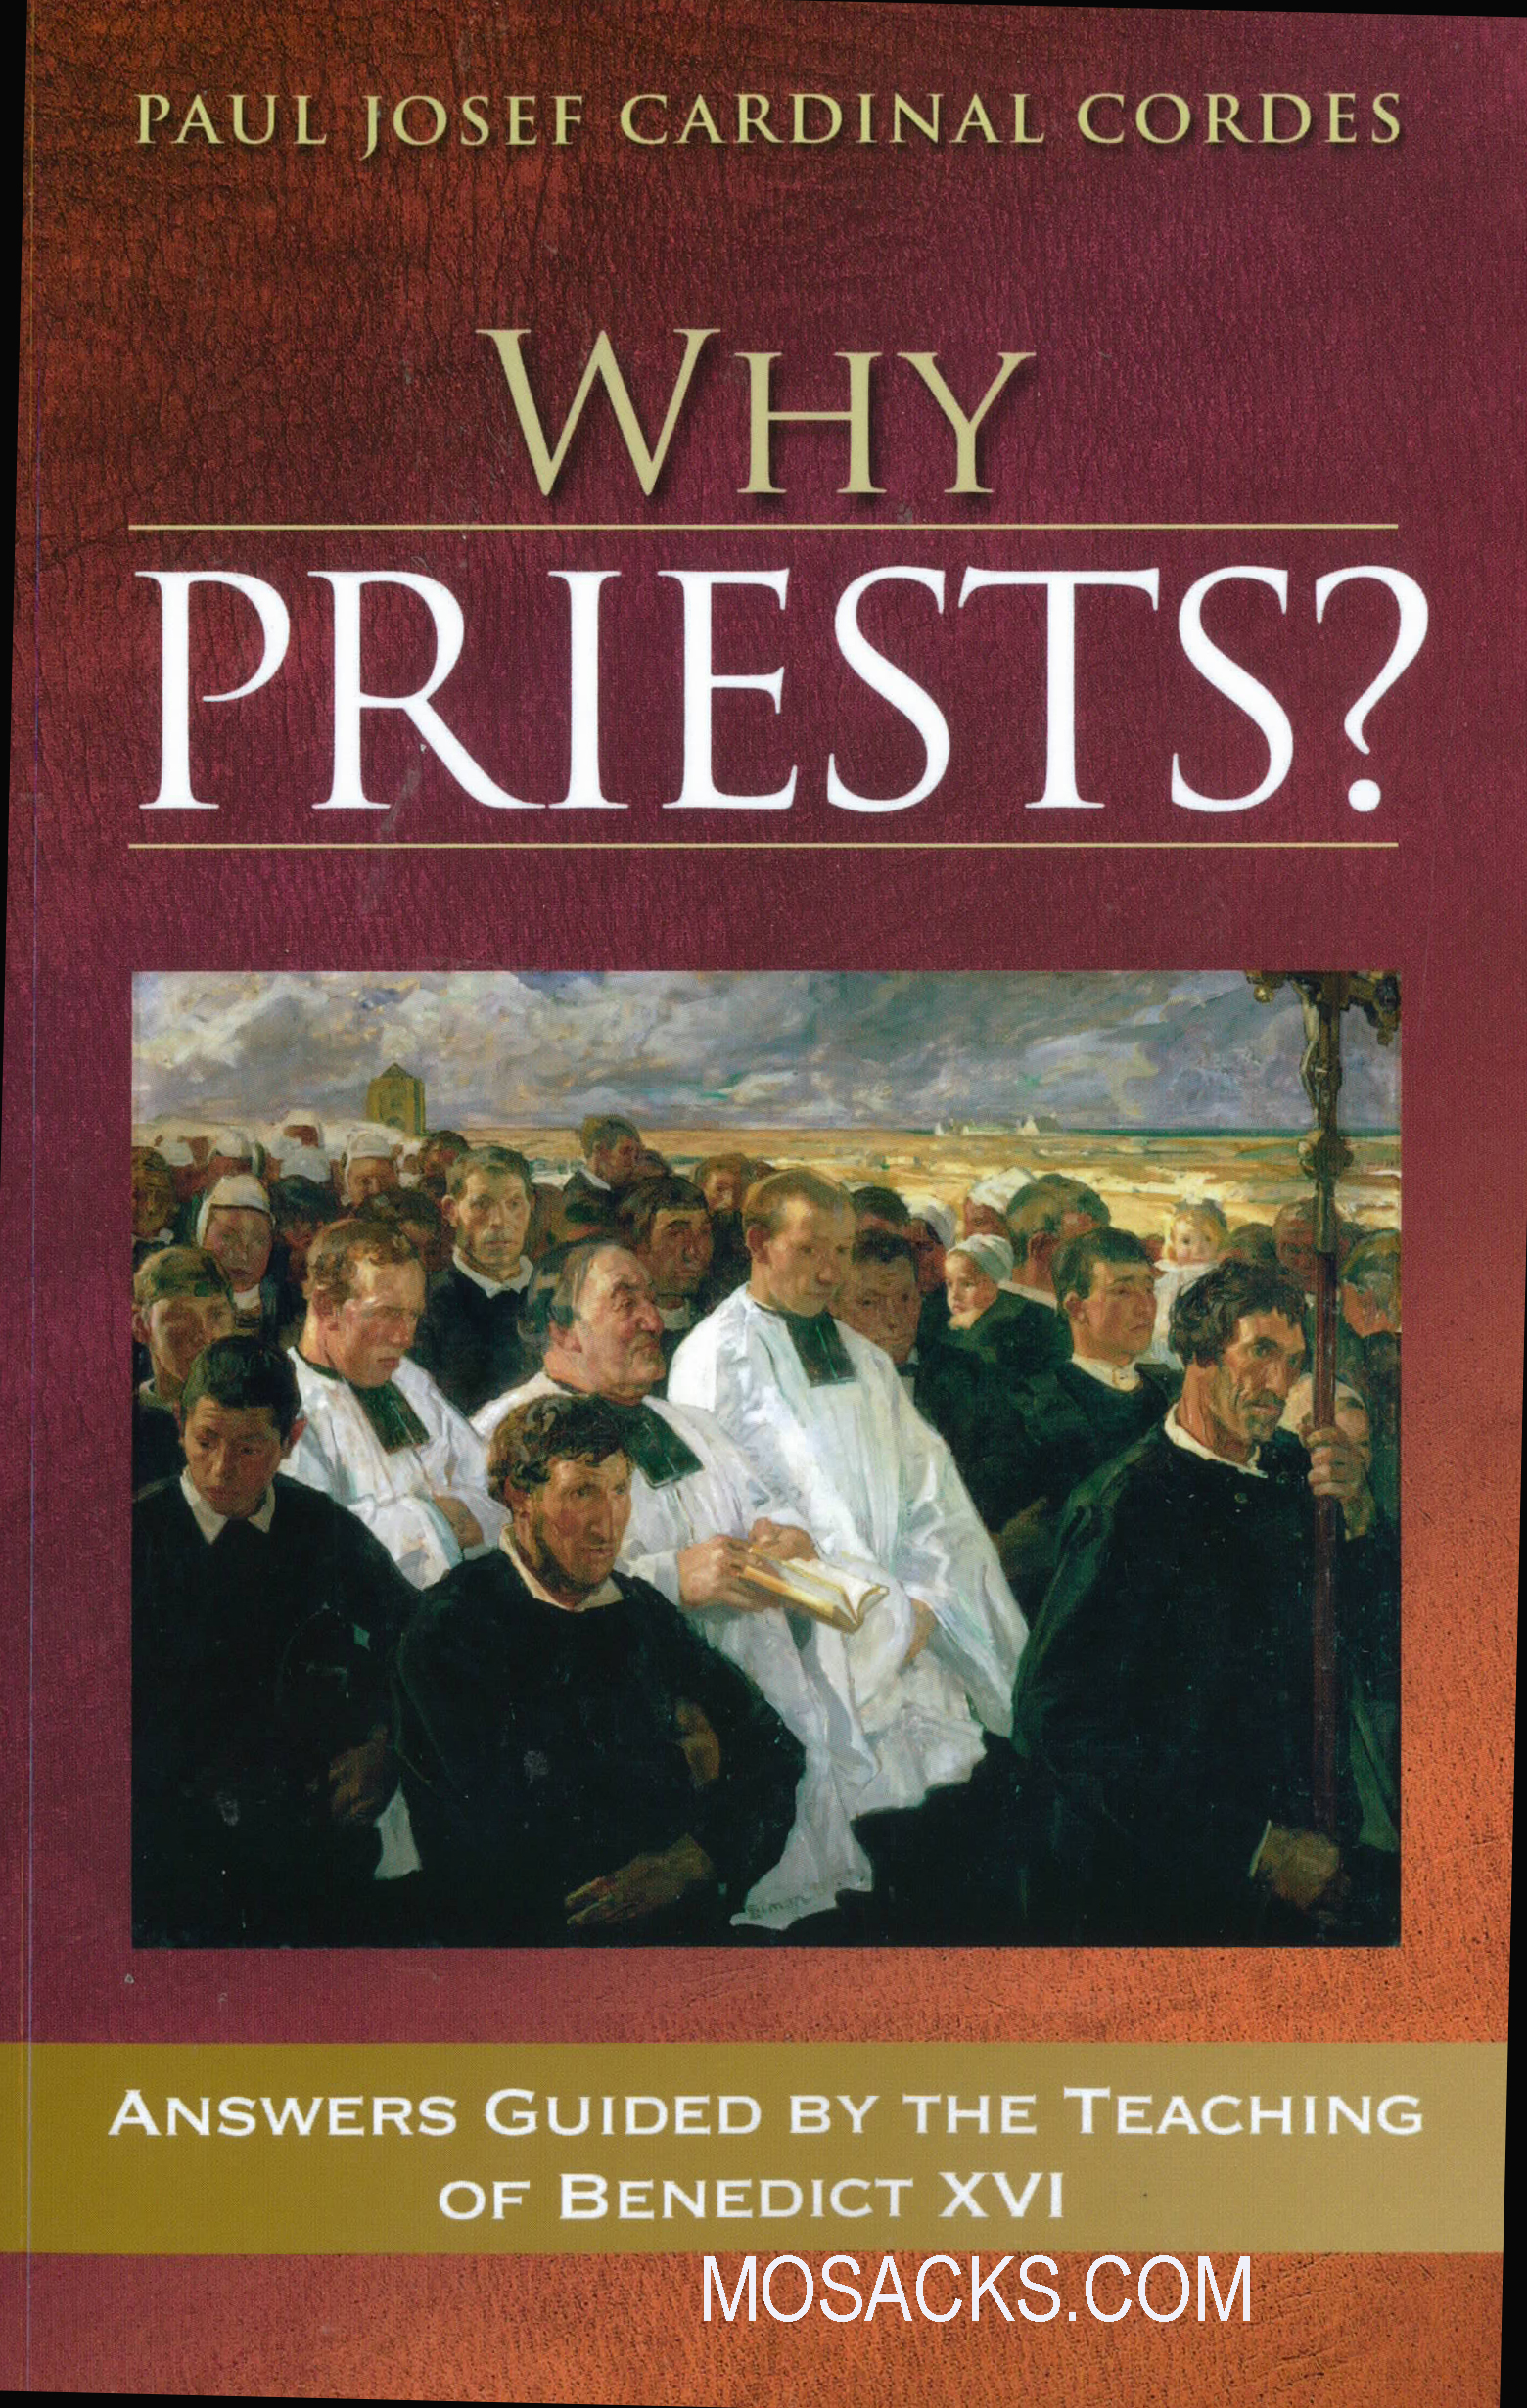 Why Priests? by Paul Josef Cardinal Cordes 445-70867